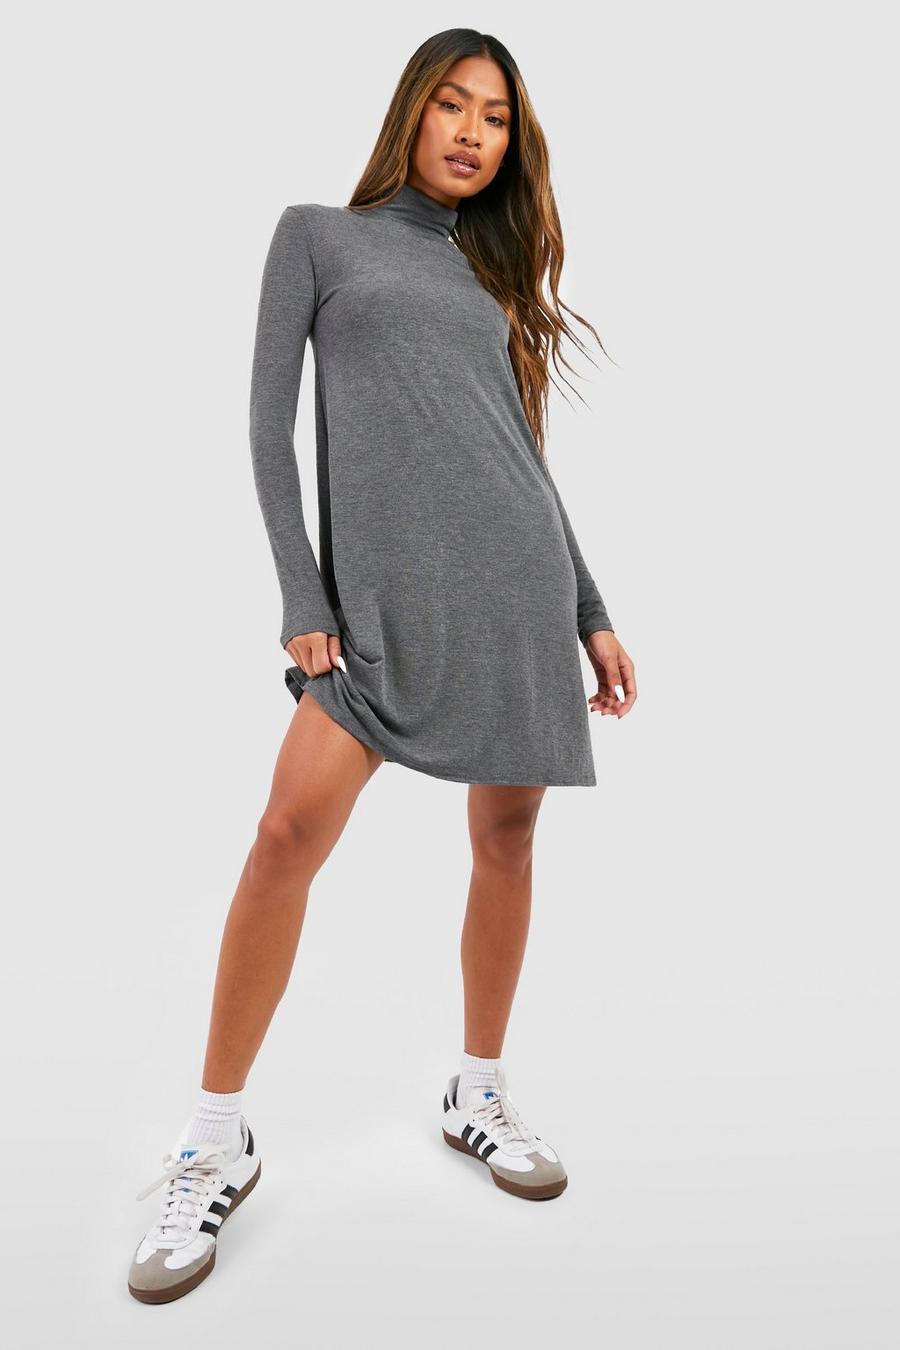 Charcoal grey Turtleneck Long Sleeve Mini Dress